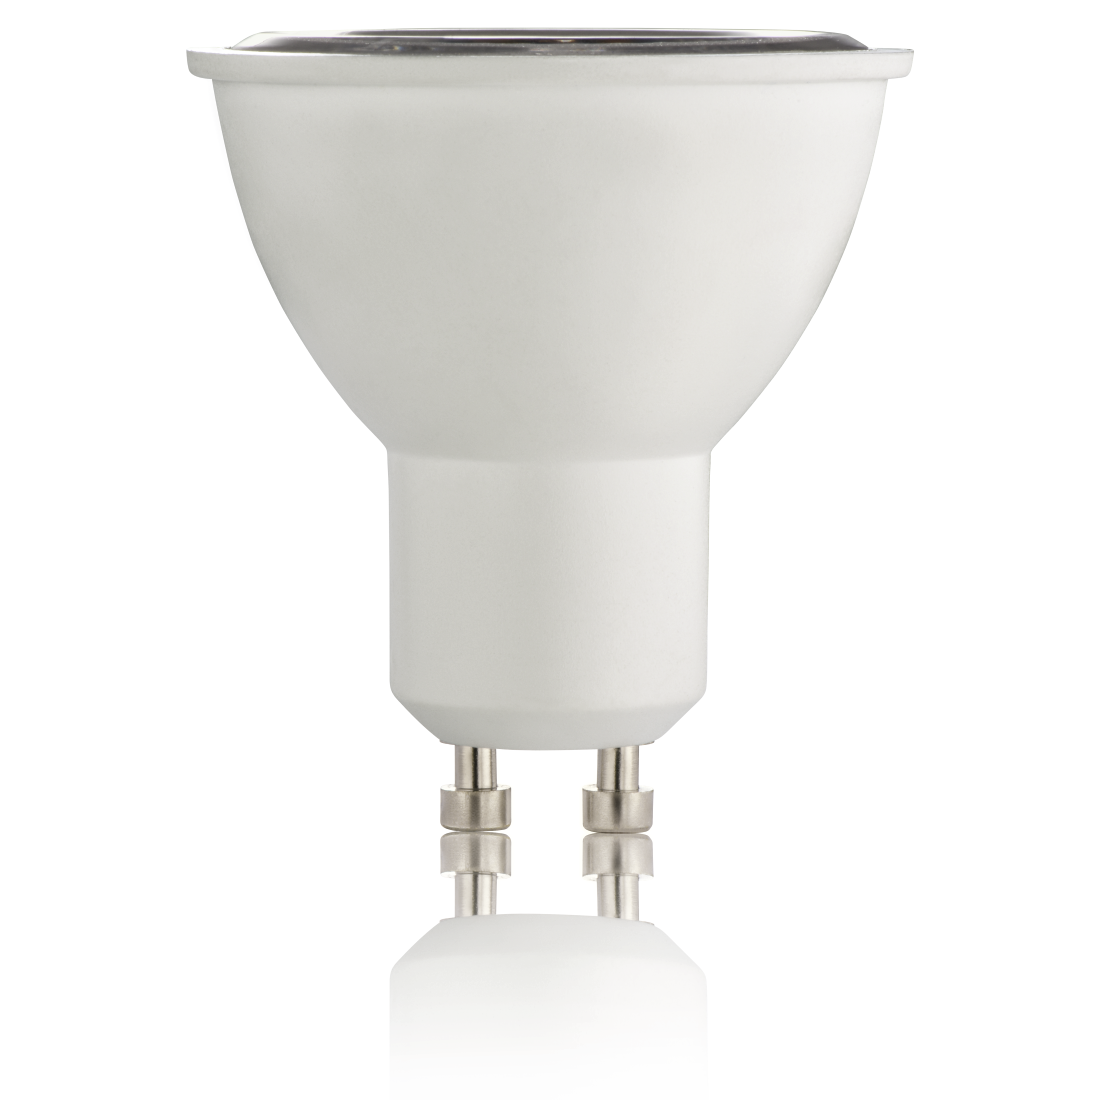 abx2 High-Res Image 2 - Xavax, LED Bulb, GU10, 400lm replaces 55W, reflector bulb PAR16, daylight